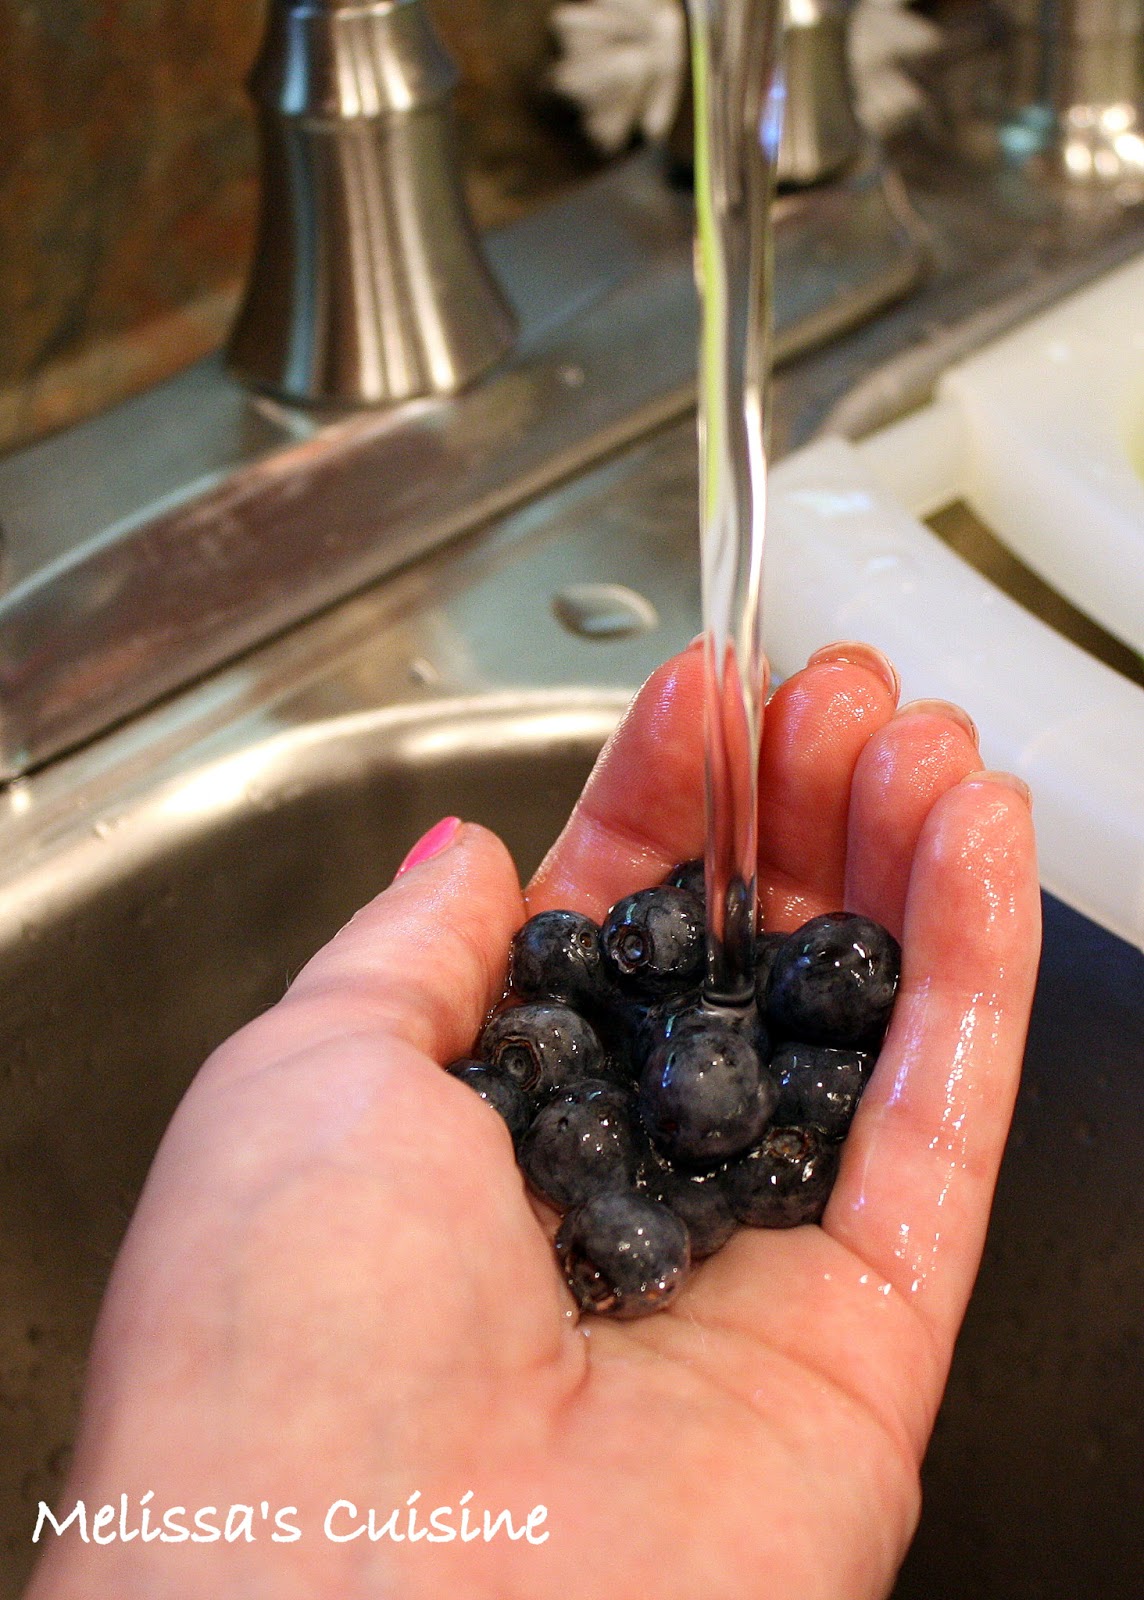 Melissa's Cuisine: Blueberries: Tips and Tricks